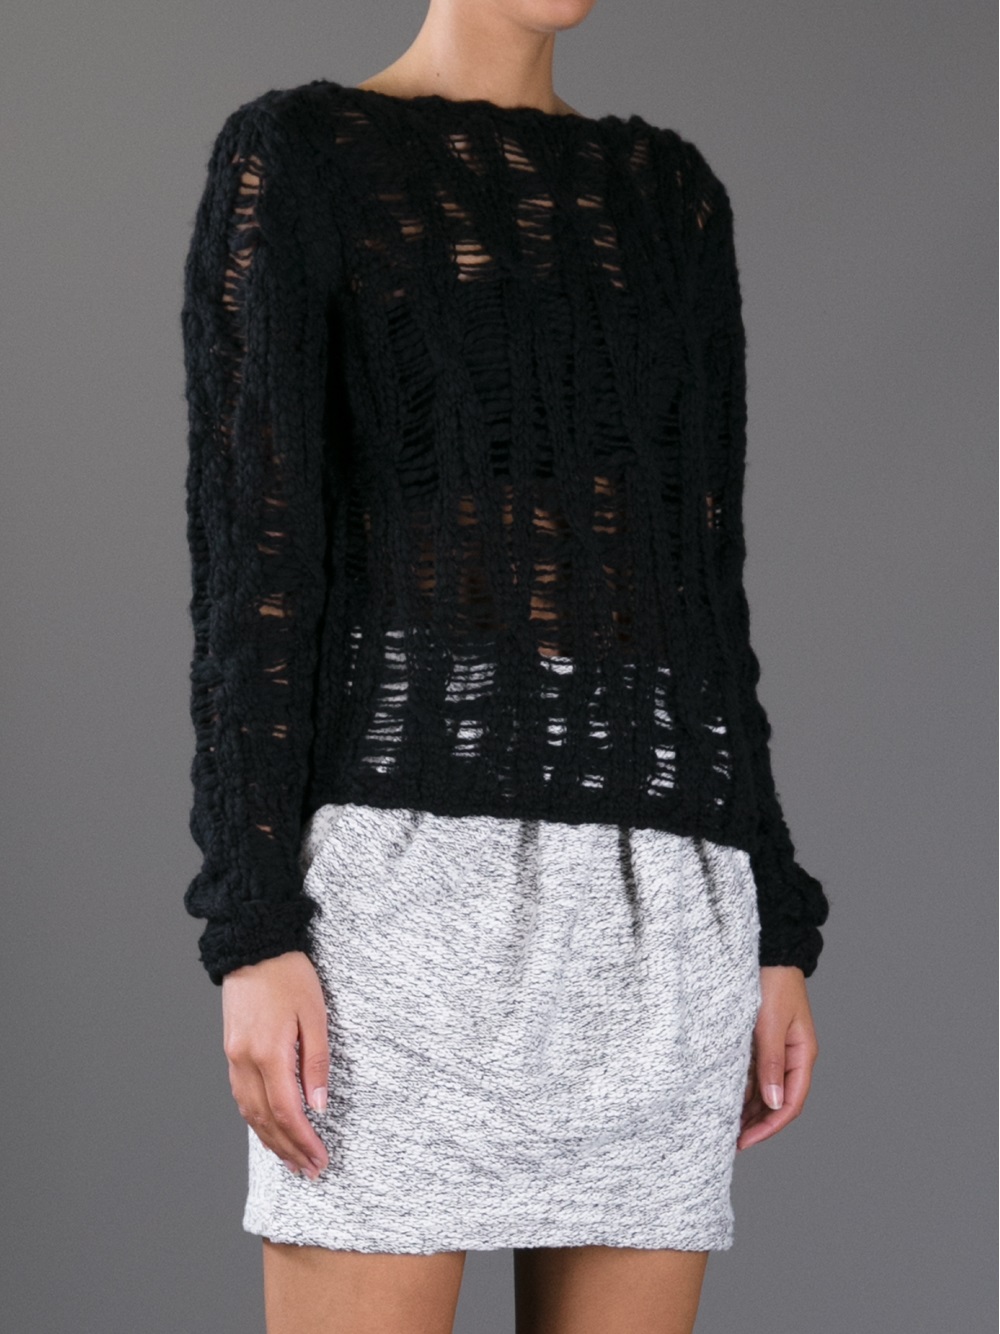 Saint Laurent Holey Knit Sweater in Black | Lyst